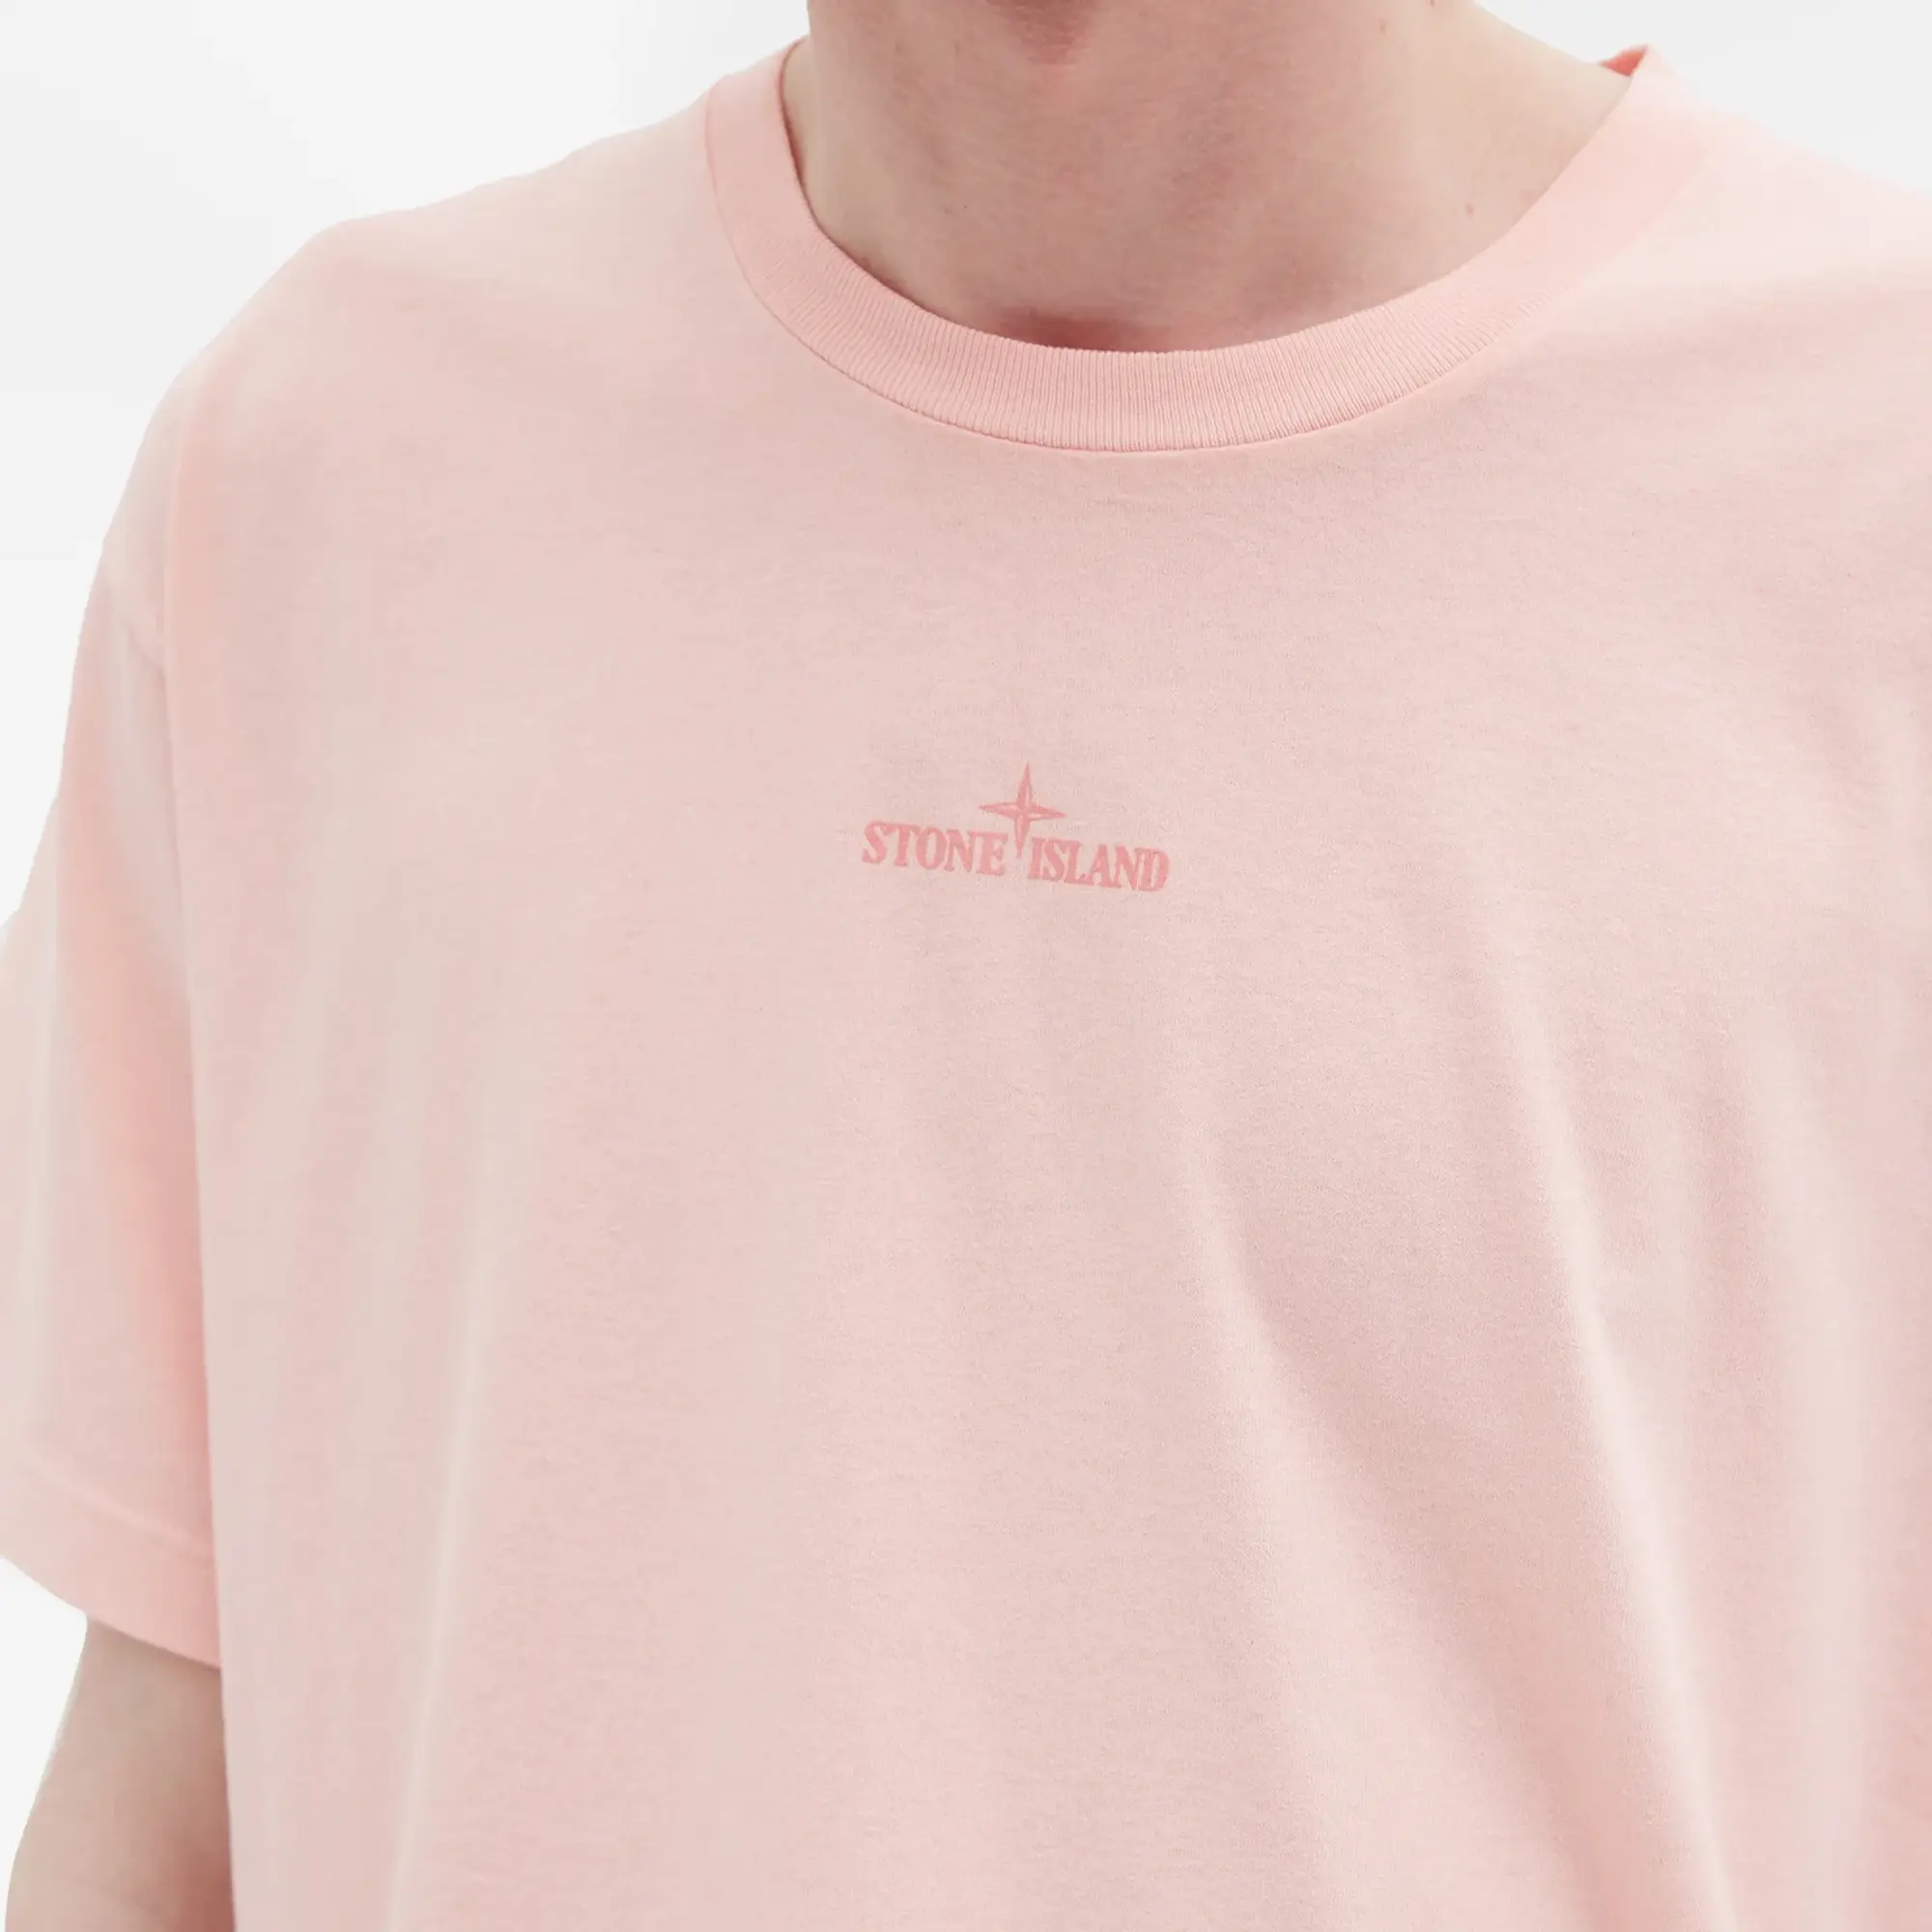 Stone Island Men's Abbreviation Three Graphic T-Shirt Pink